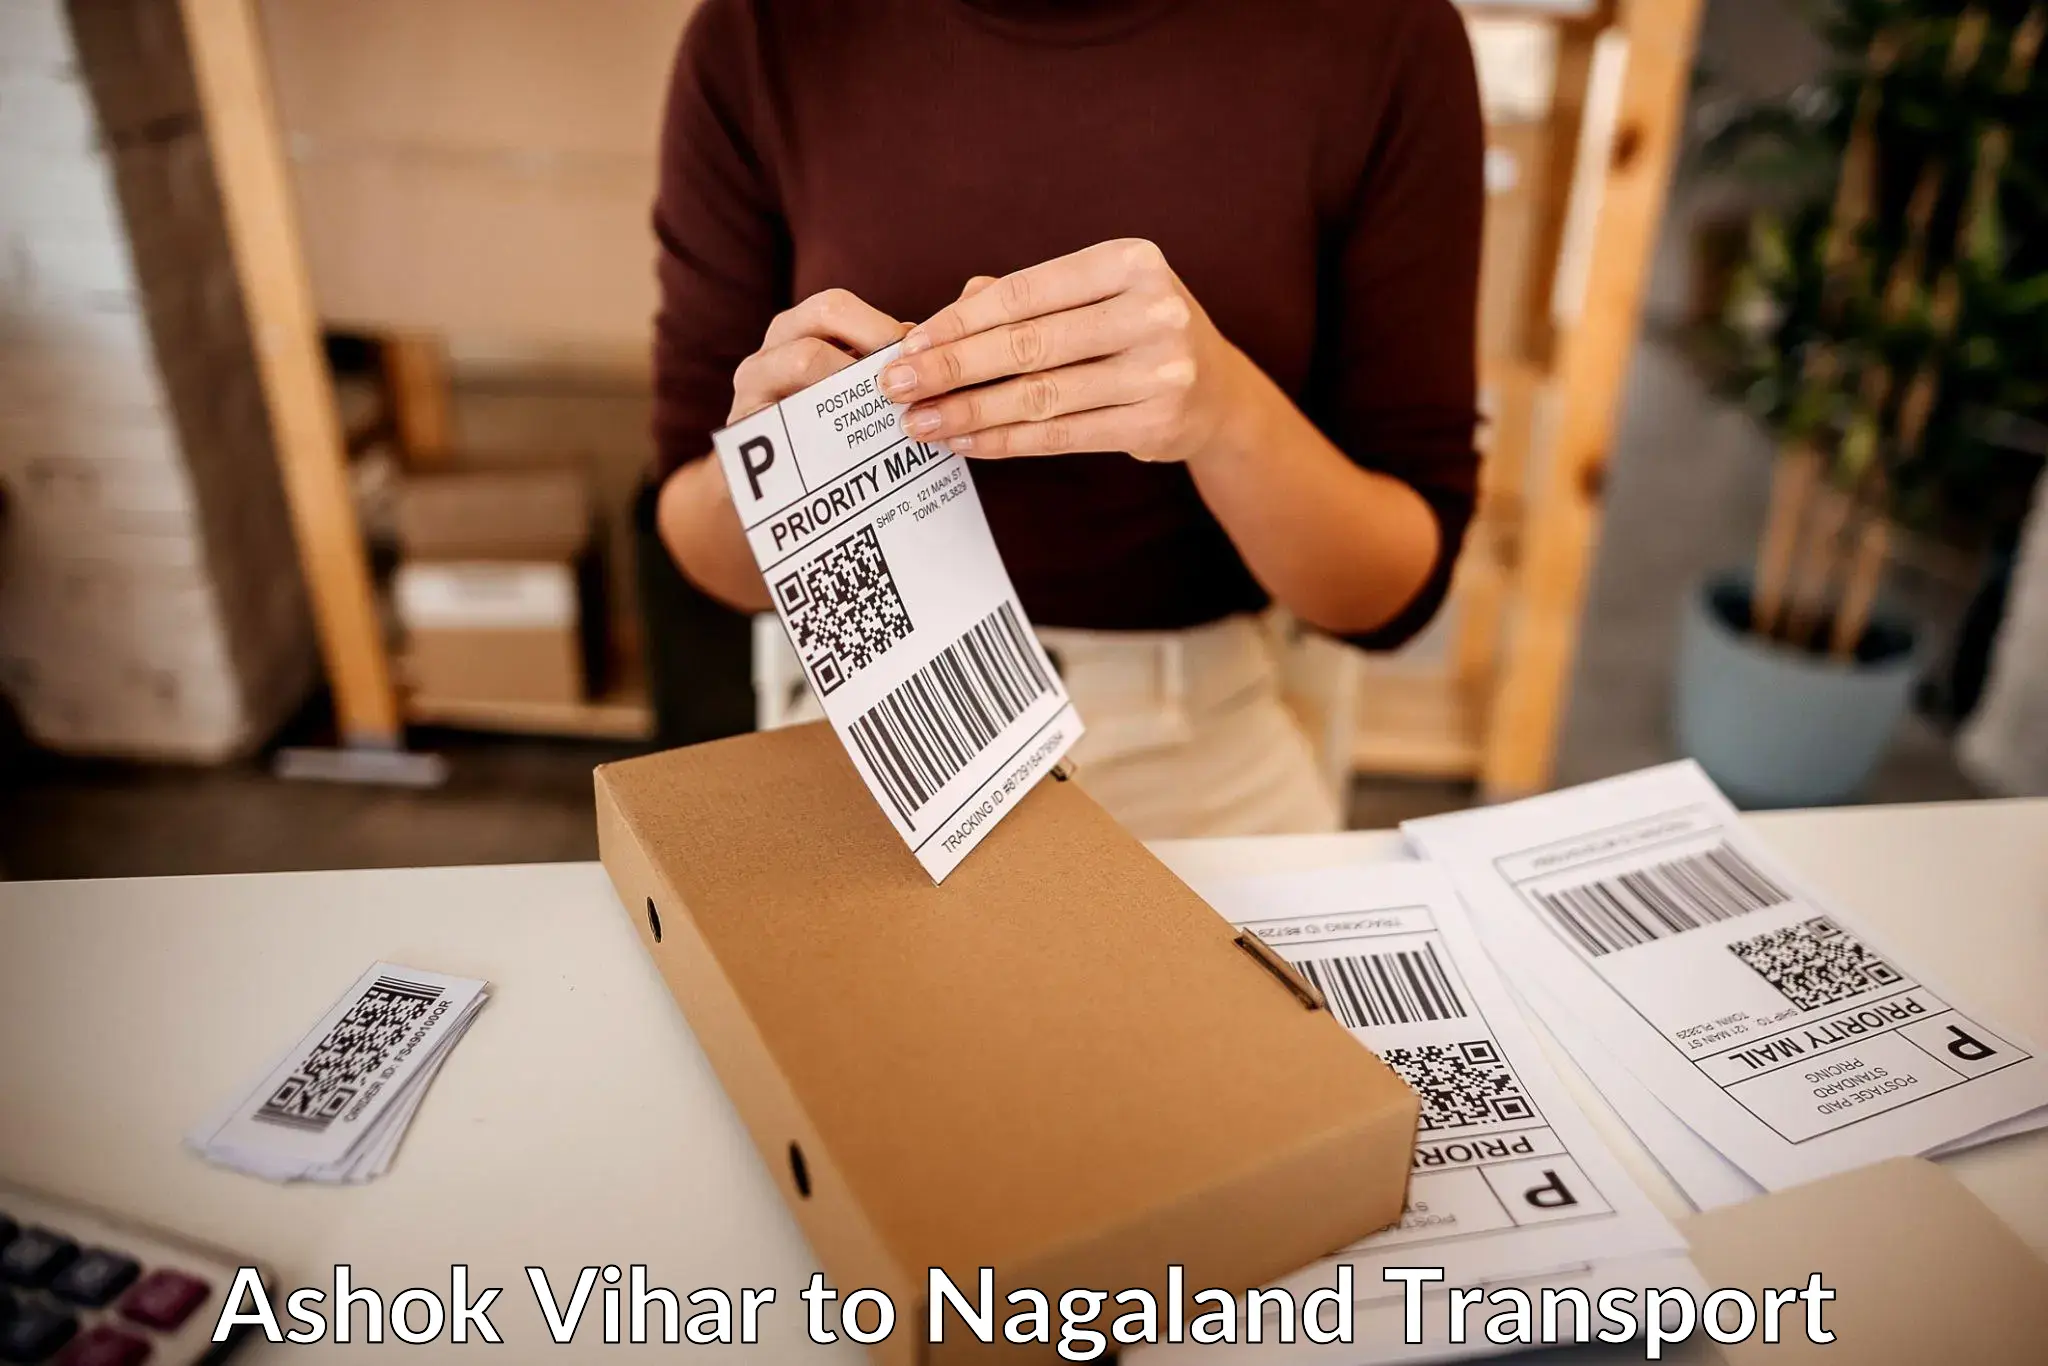 Delivery service Ashok Vihar to Dimapur